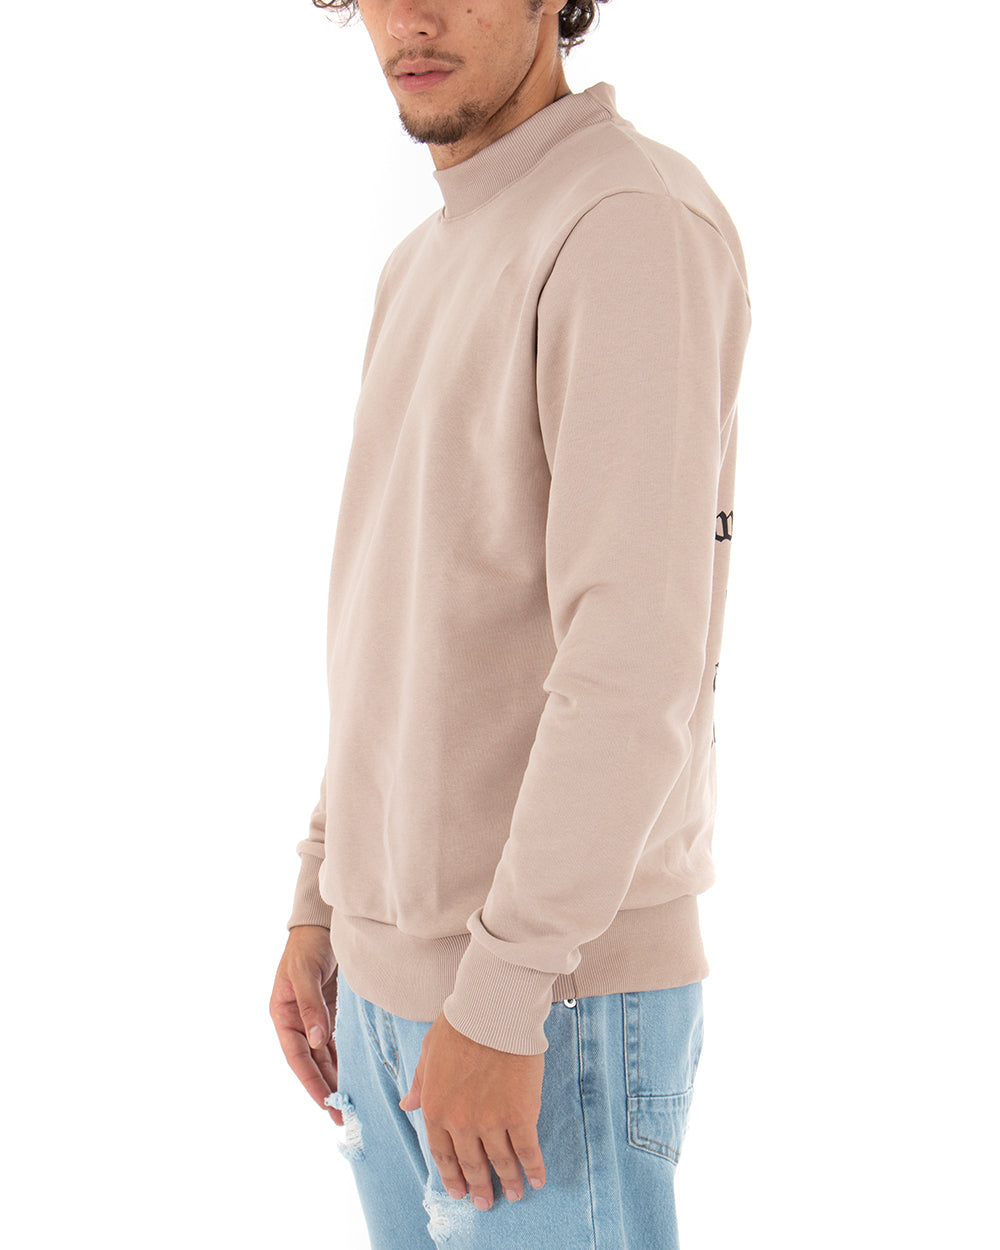 Men's Crew Neck Sweatshirt With Beige Print Regular Fit GIOSAL-F2819A